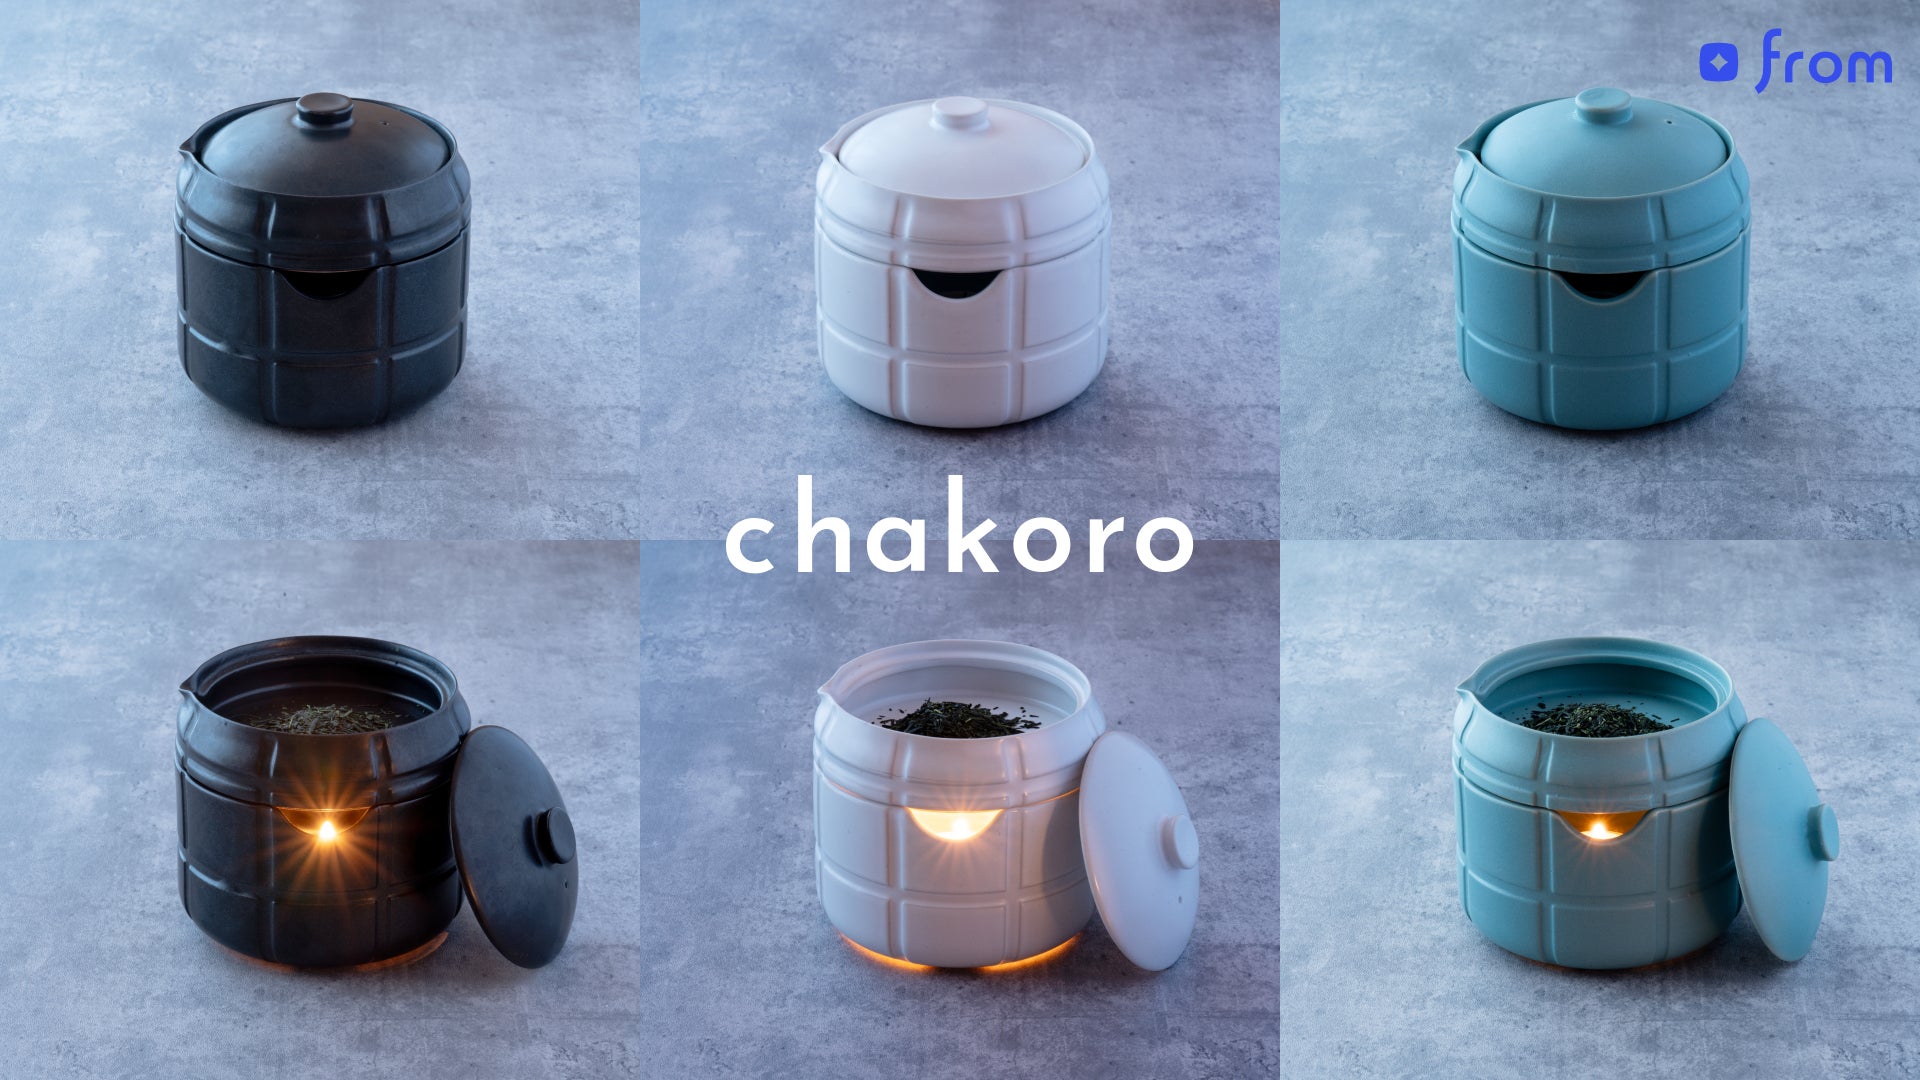 『chakoro』の一般販売を開始 – スクリーンから離れ、お茶の香りに浸る特別な時間